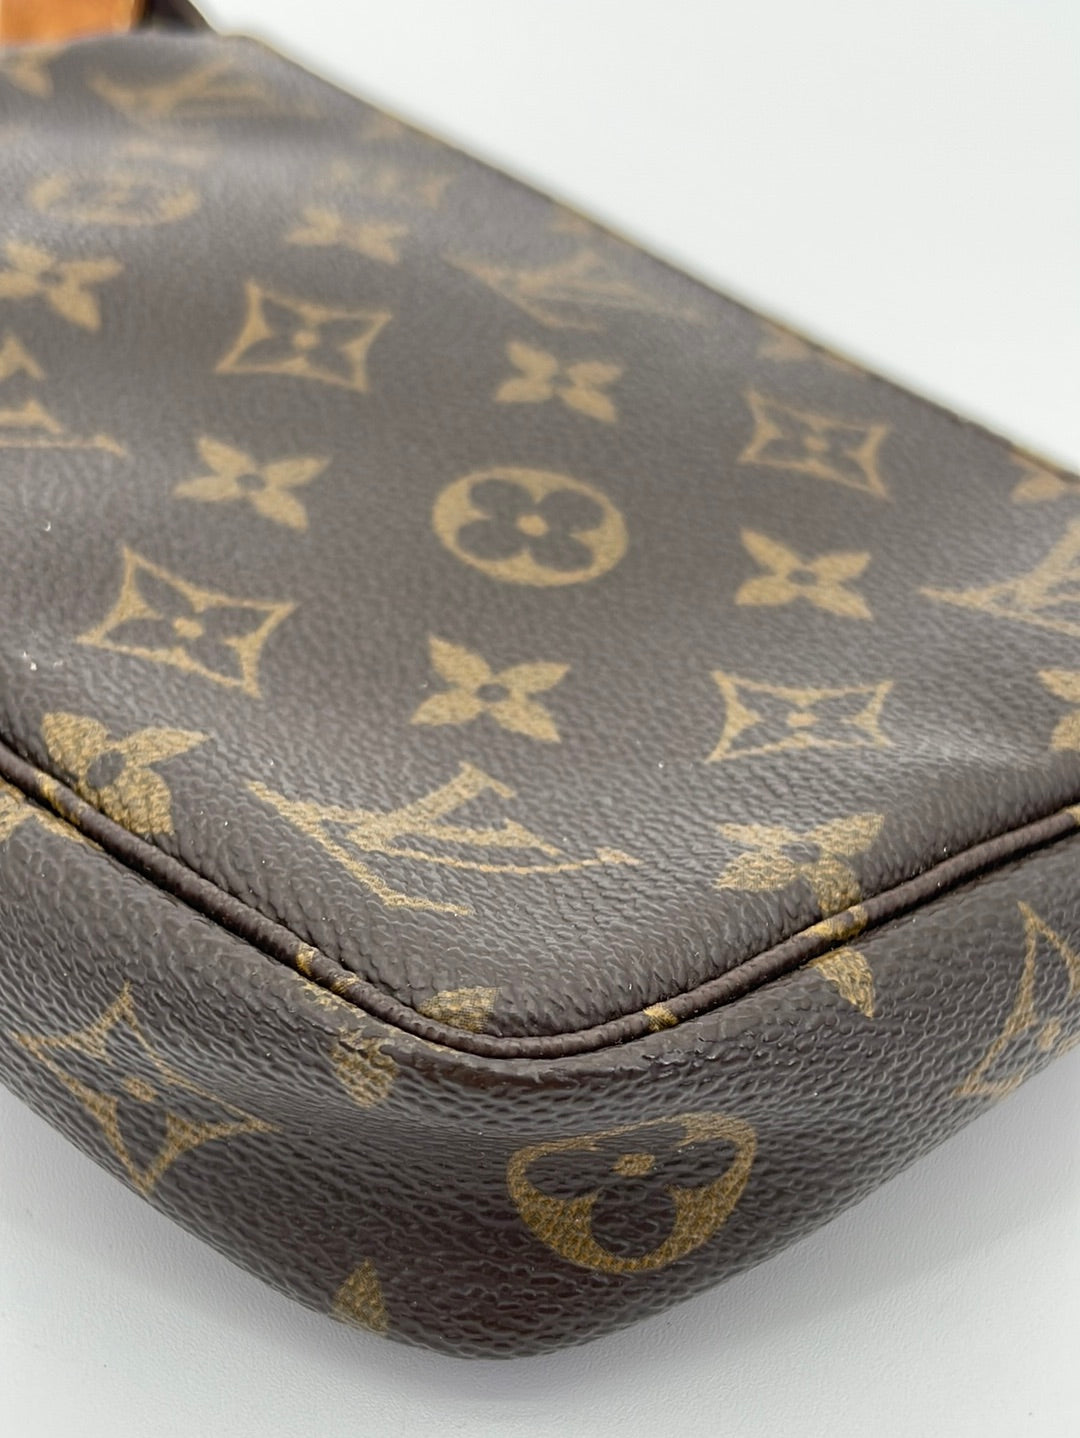 PRELOVED  Louis Vuitton Monogram Accessories Pochette Bag CA0011 052923